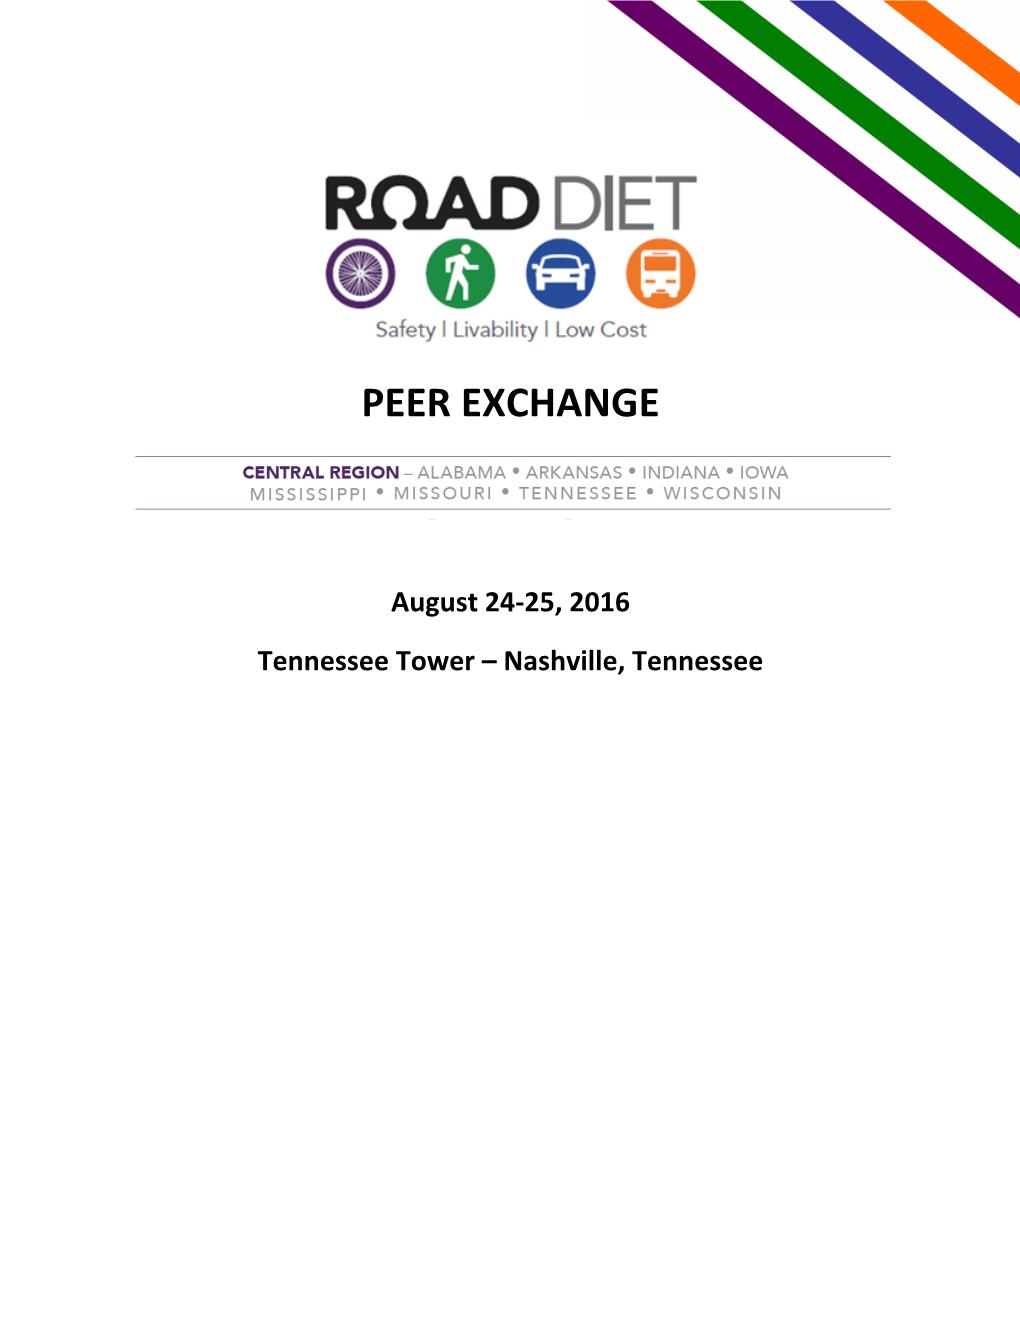 US DOT FHWA's Summary of Road Diet Peer Exchange